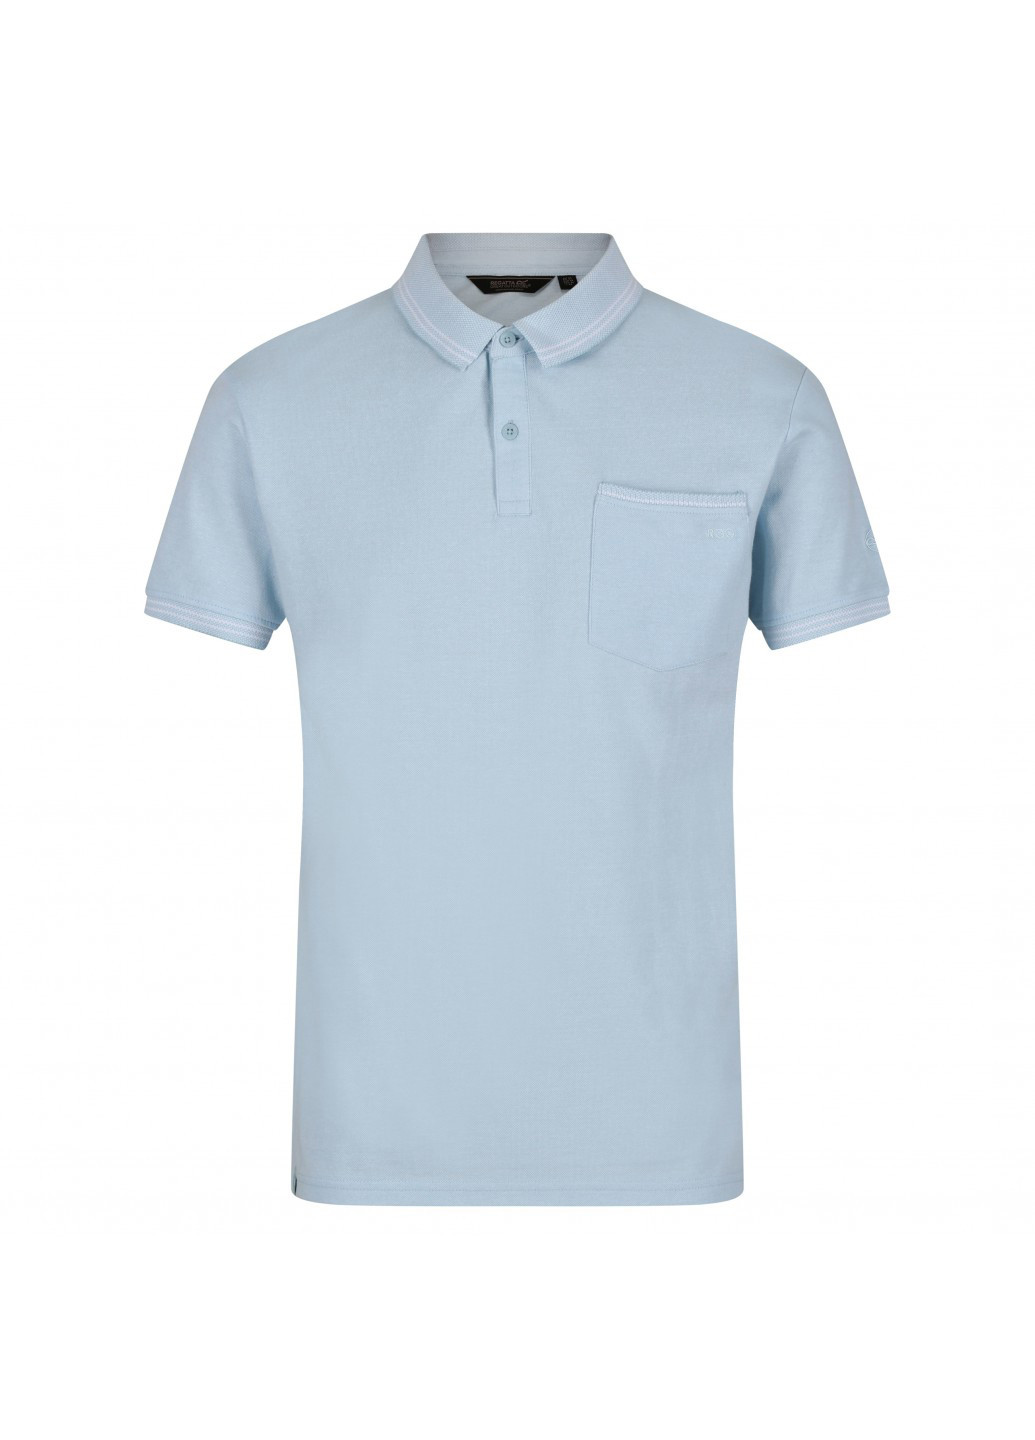 Голубой футболка-поло для мужчин Regatta однотонная